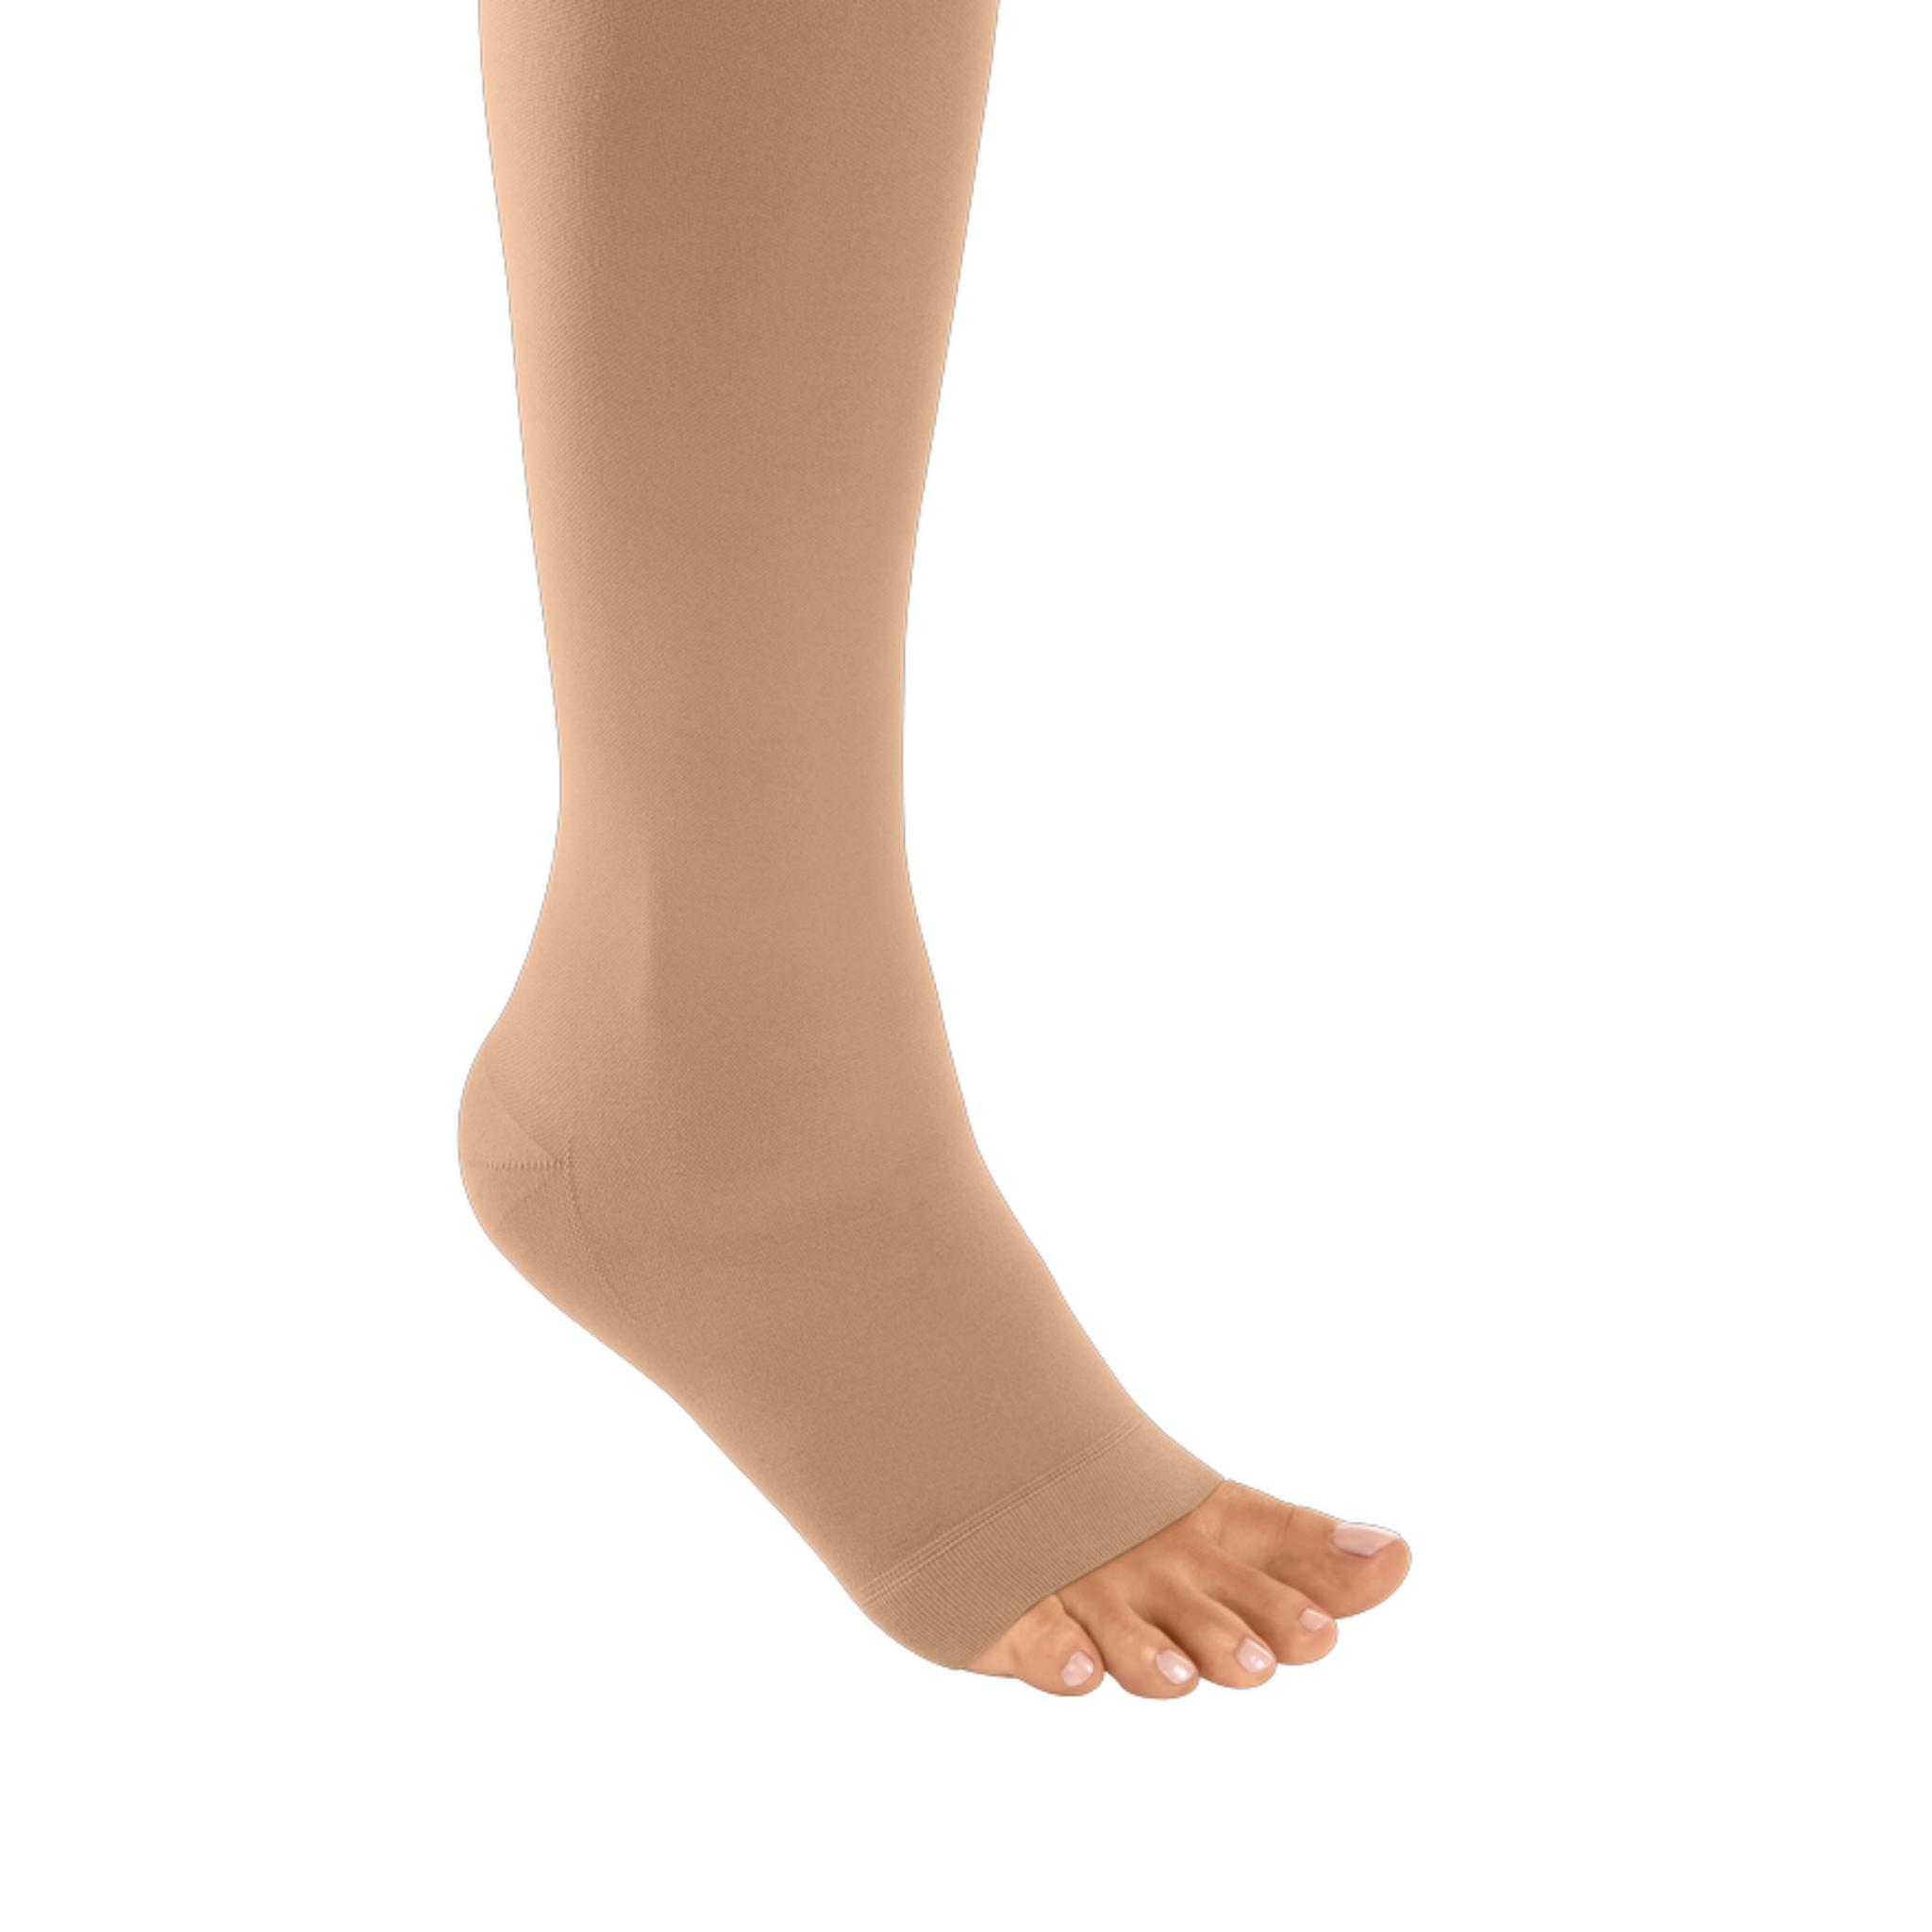 Compression Stockings Pantyhose Open Toe Caramel mediven cotton